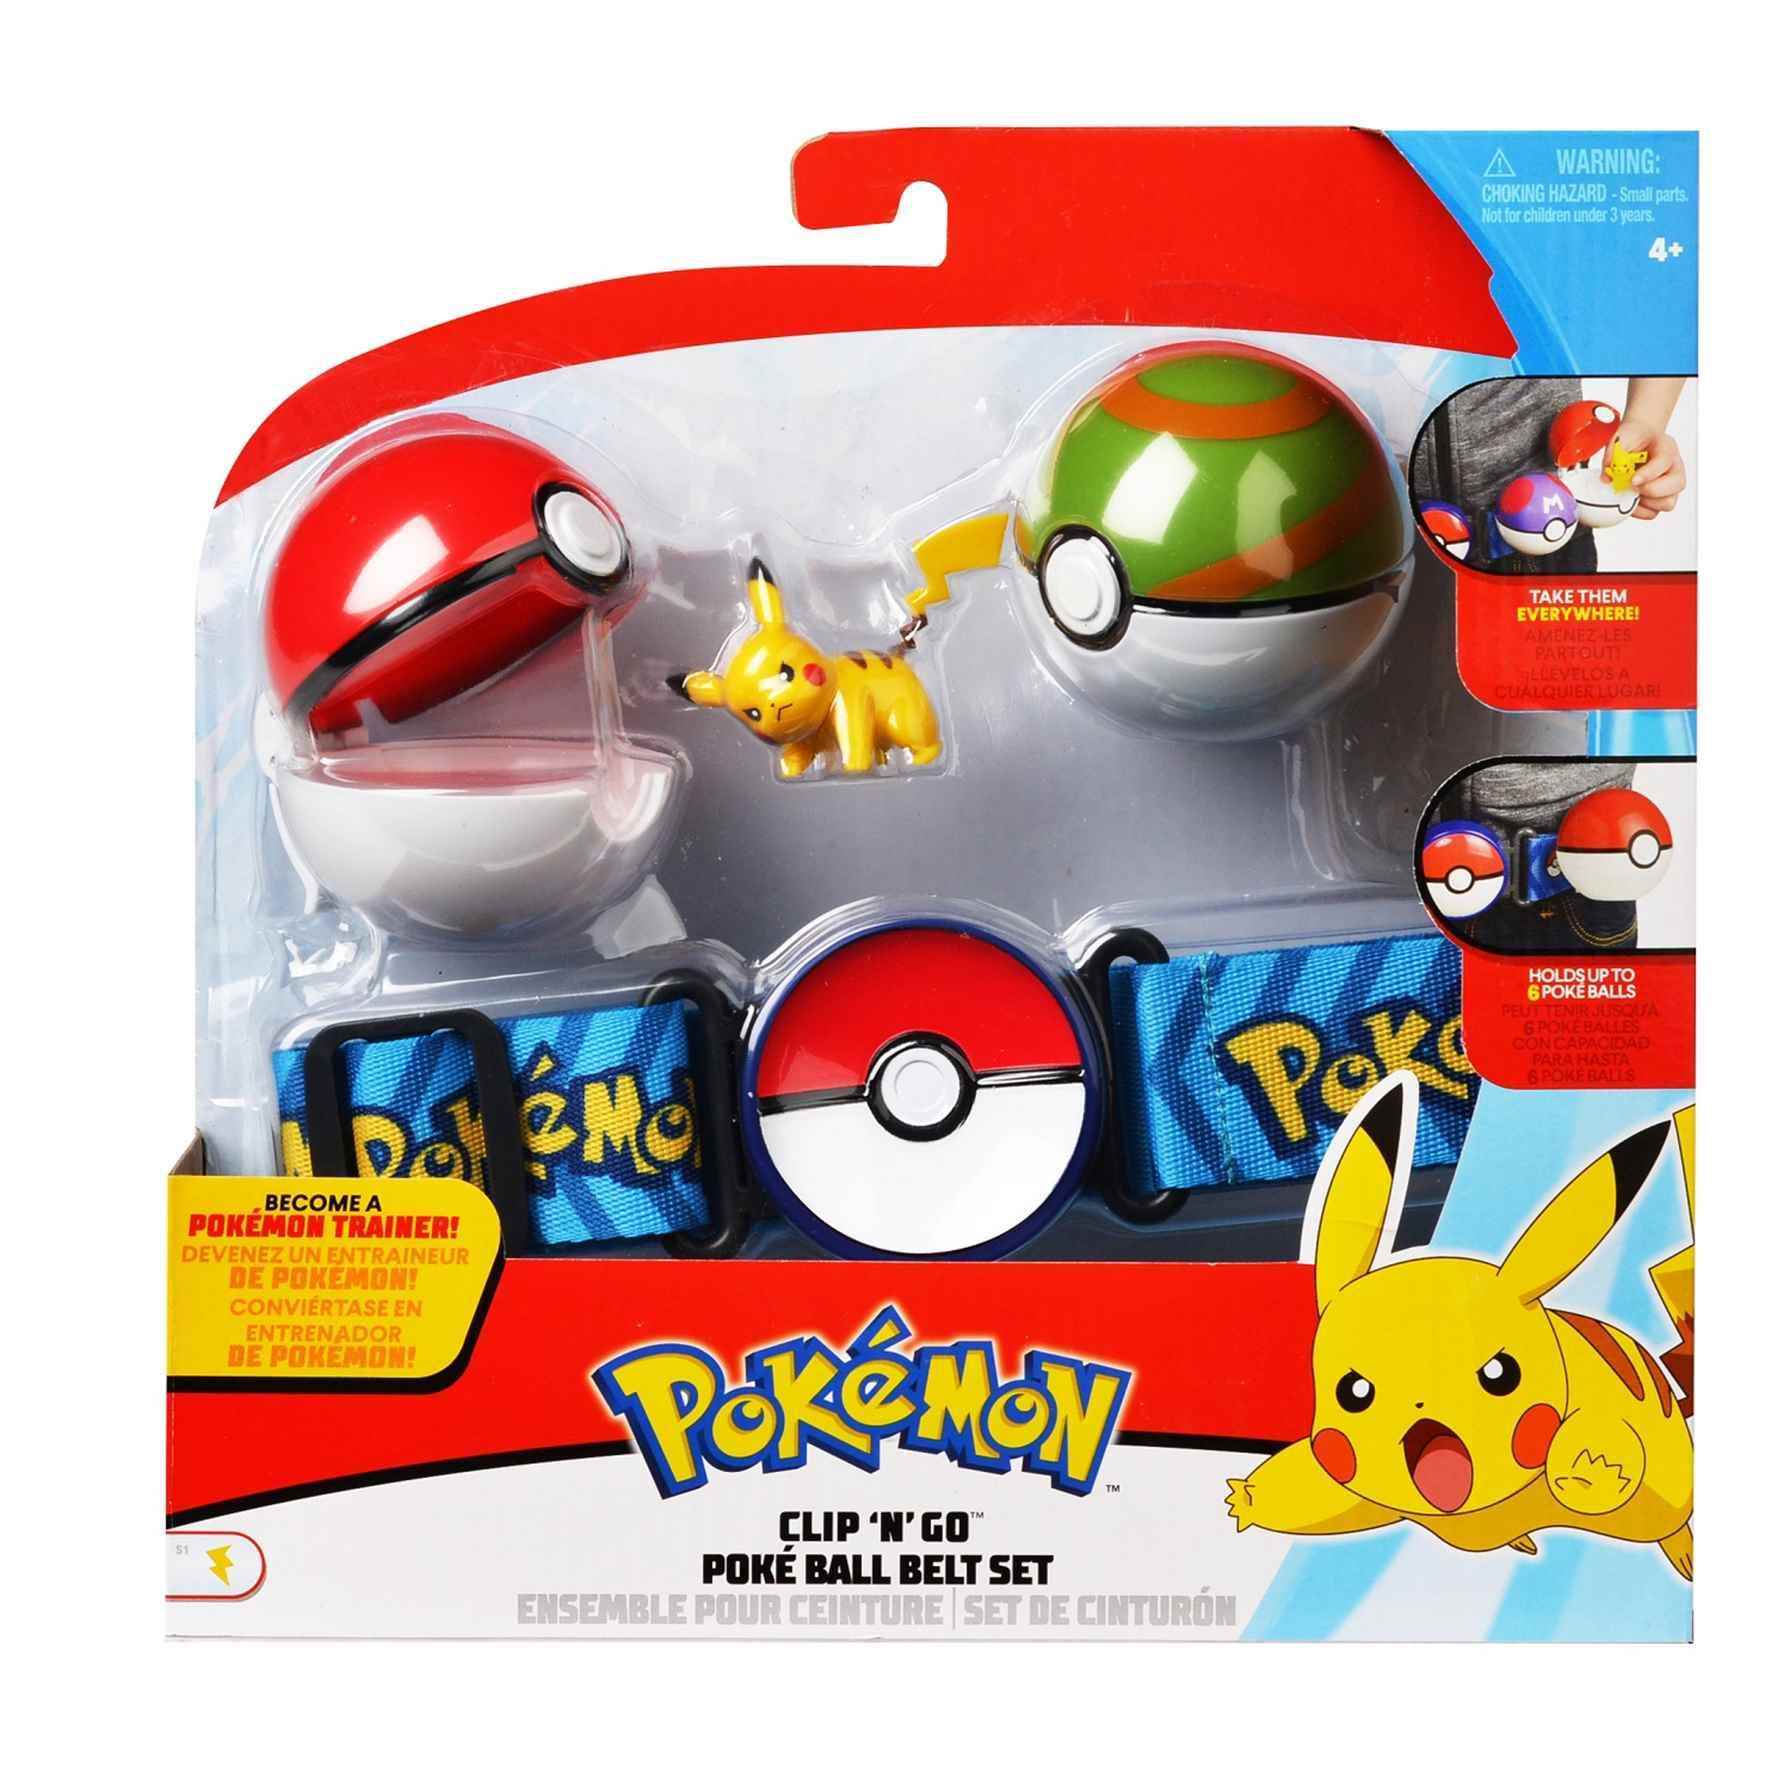 Ocurrencia Pico pala Comprar Cinturón Ataque Pokémon Diferentes Modelos | Toy Planet